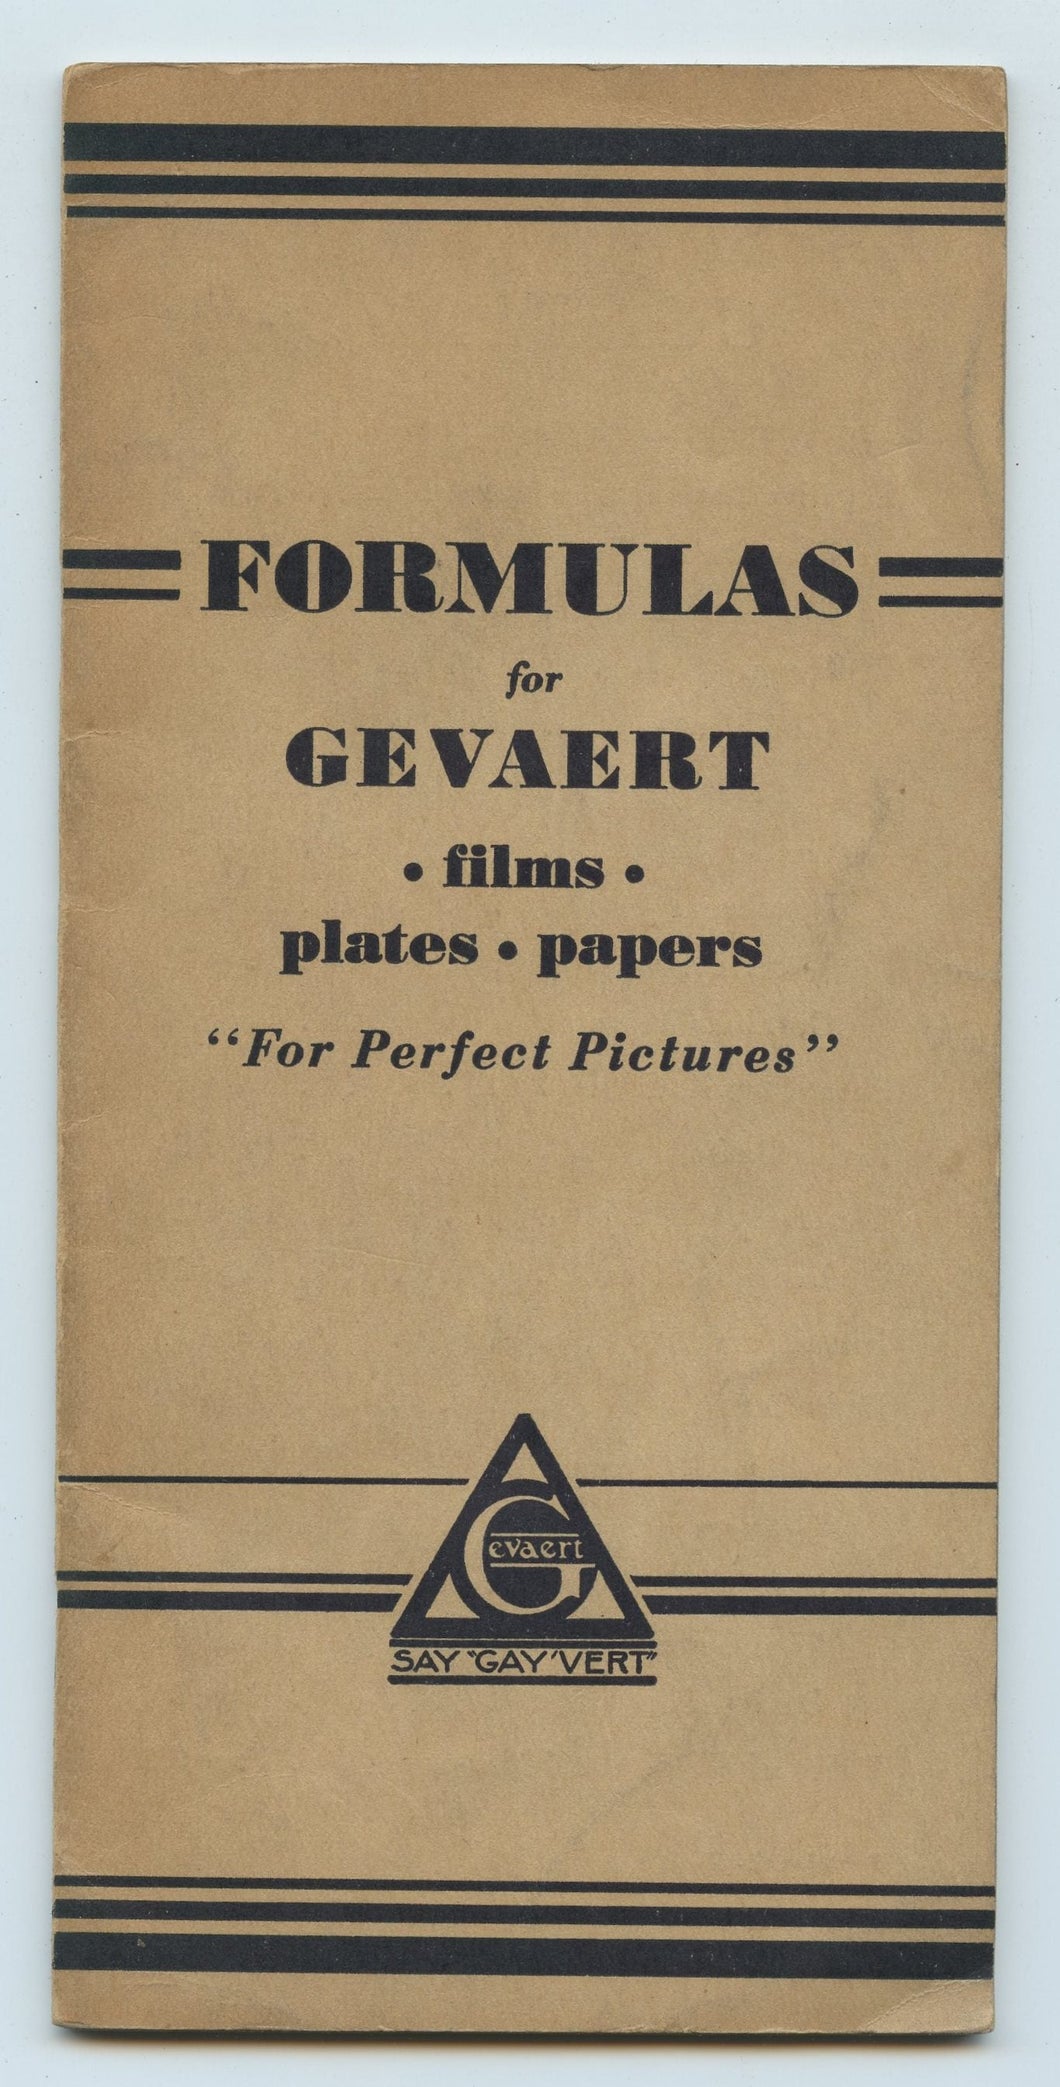 Formulas for Gevaert: films, plates, papers